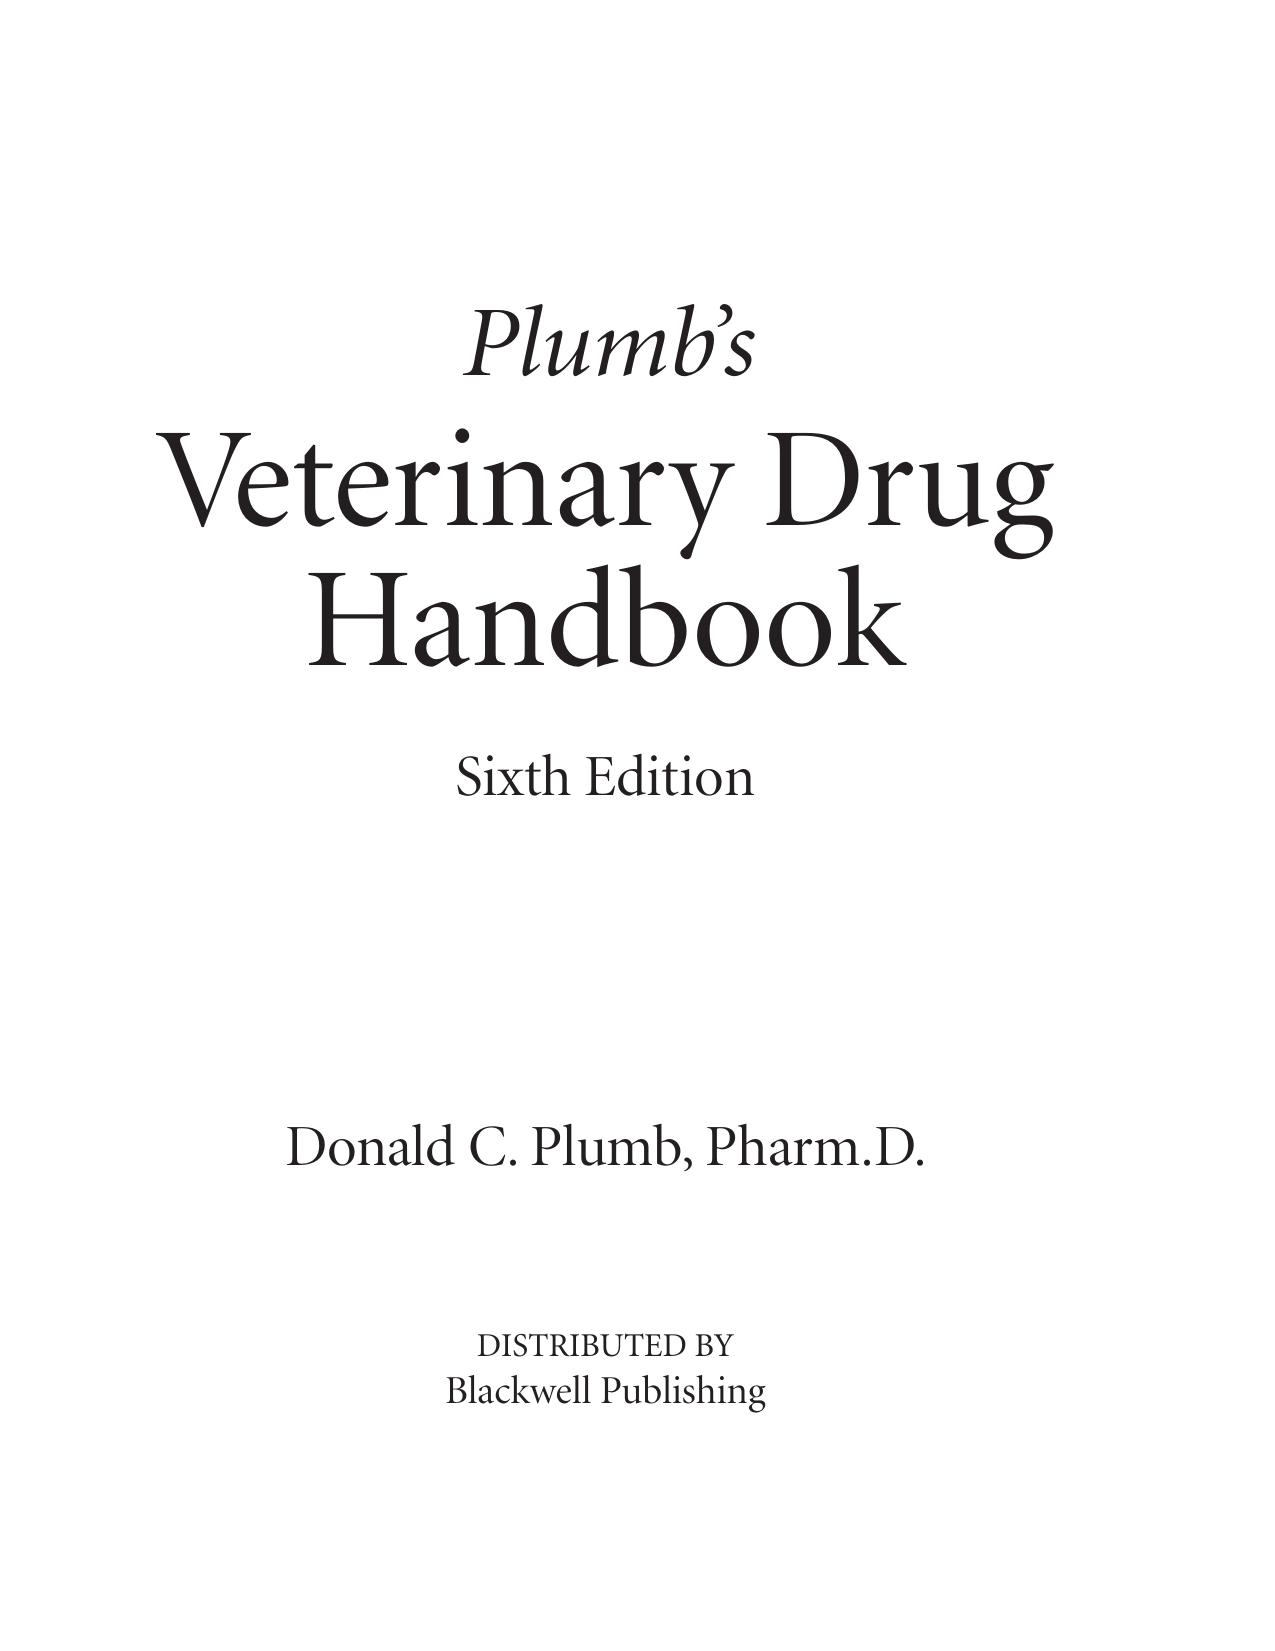 Plumb's Veterinary Drug Handbook [Desk Ed.] 6th ed. 2008